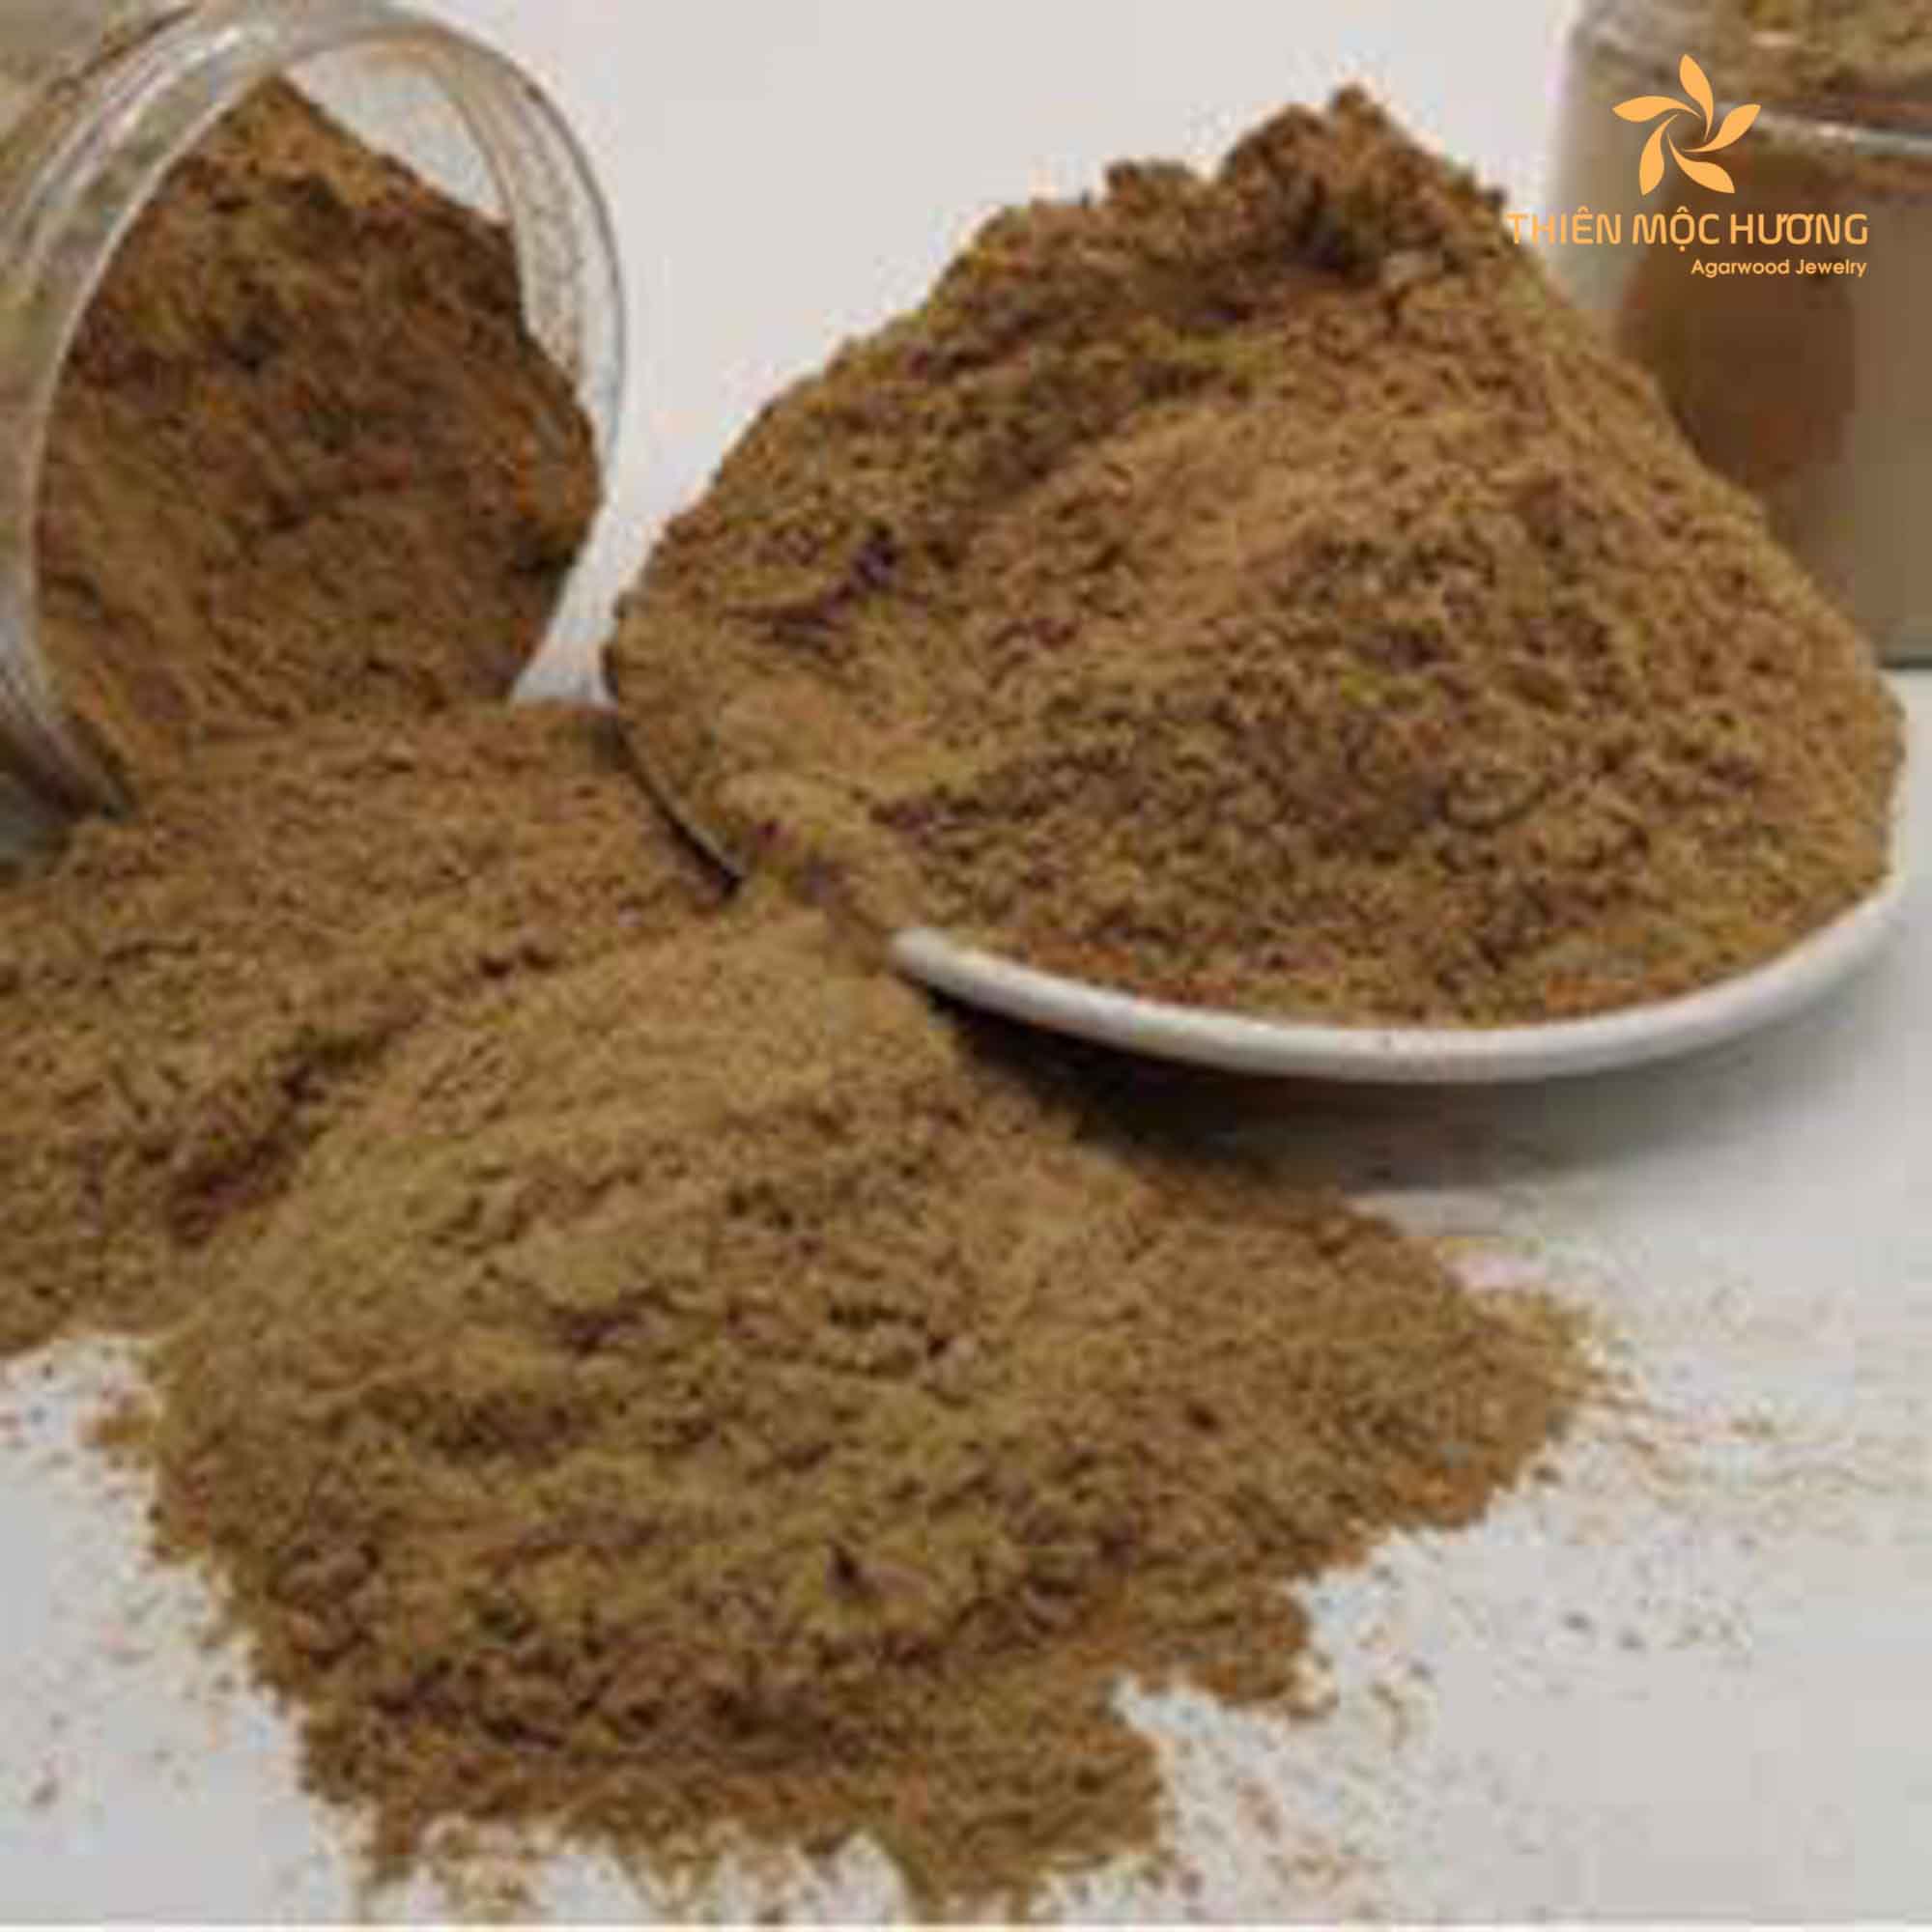 Agarwood powder uses - Cosmetic and skincare benefits